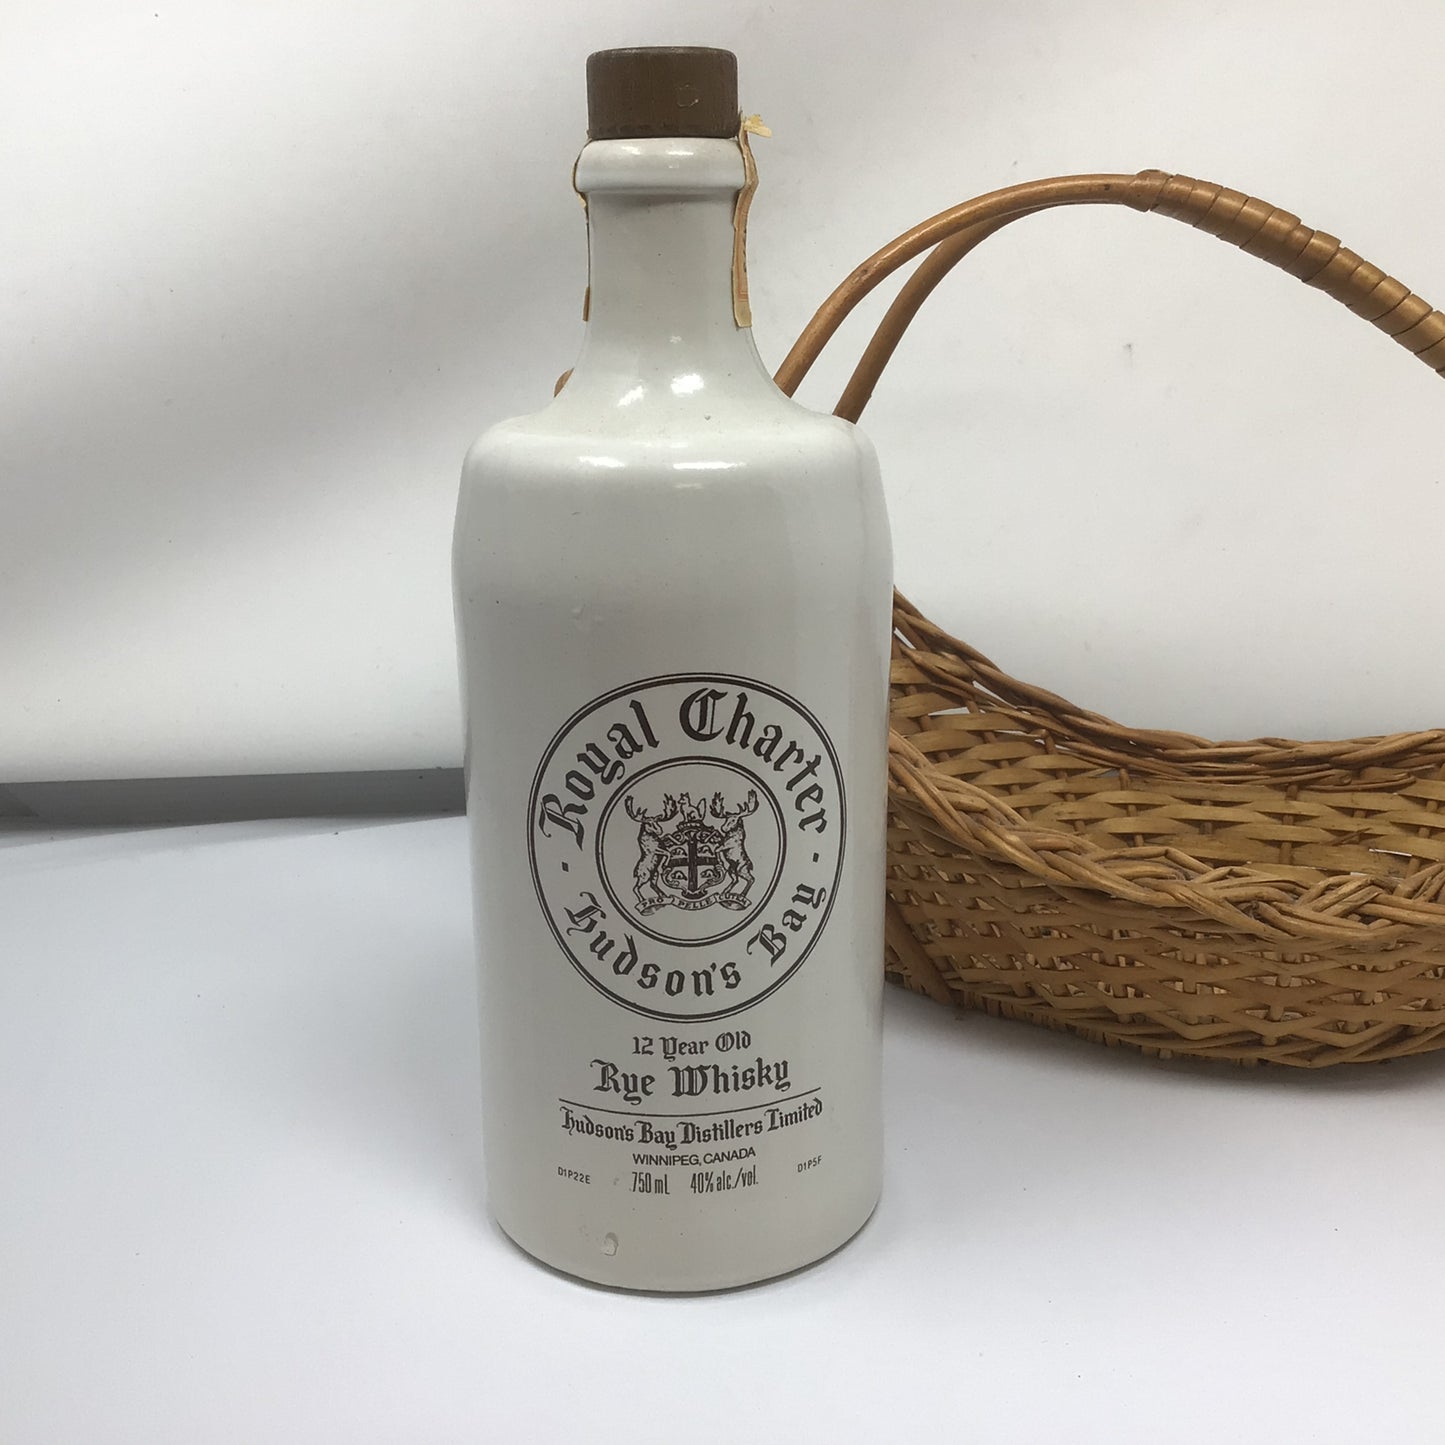 Vintage Hudson’s Bay 1973 Royal Charter Whiskey Bottle in Wicker Carrier